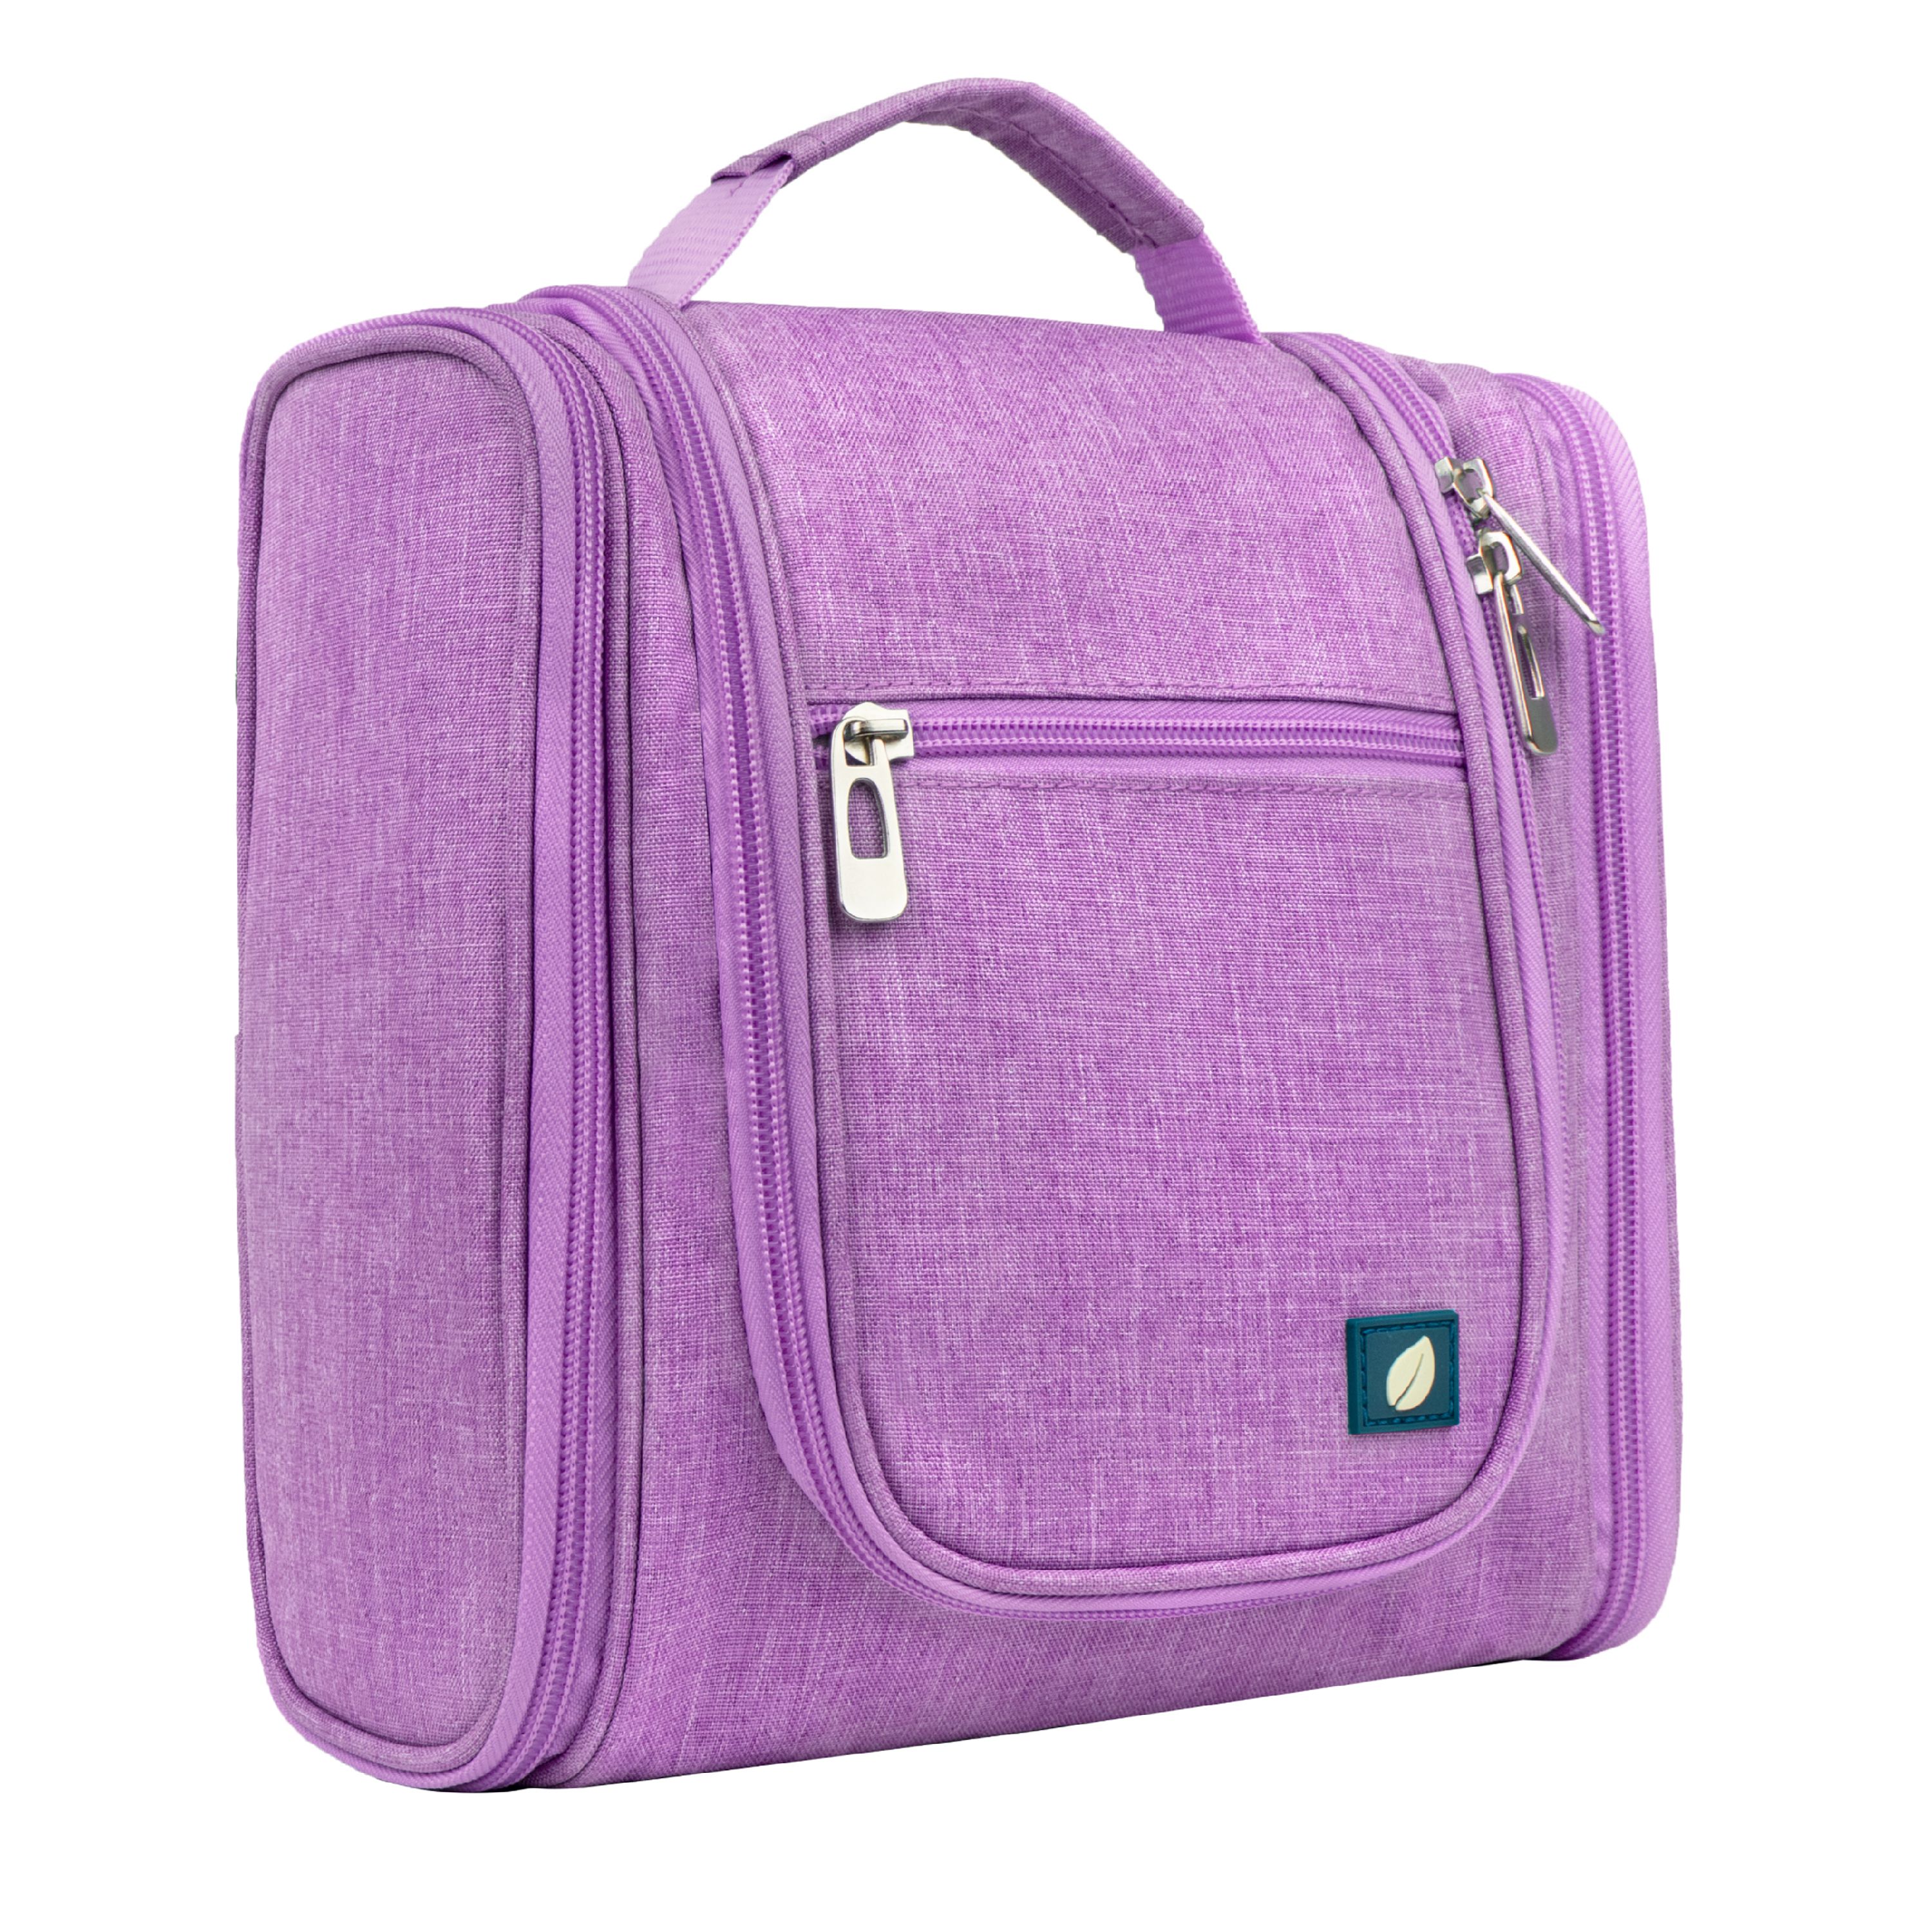 purple travel toiletry bag